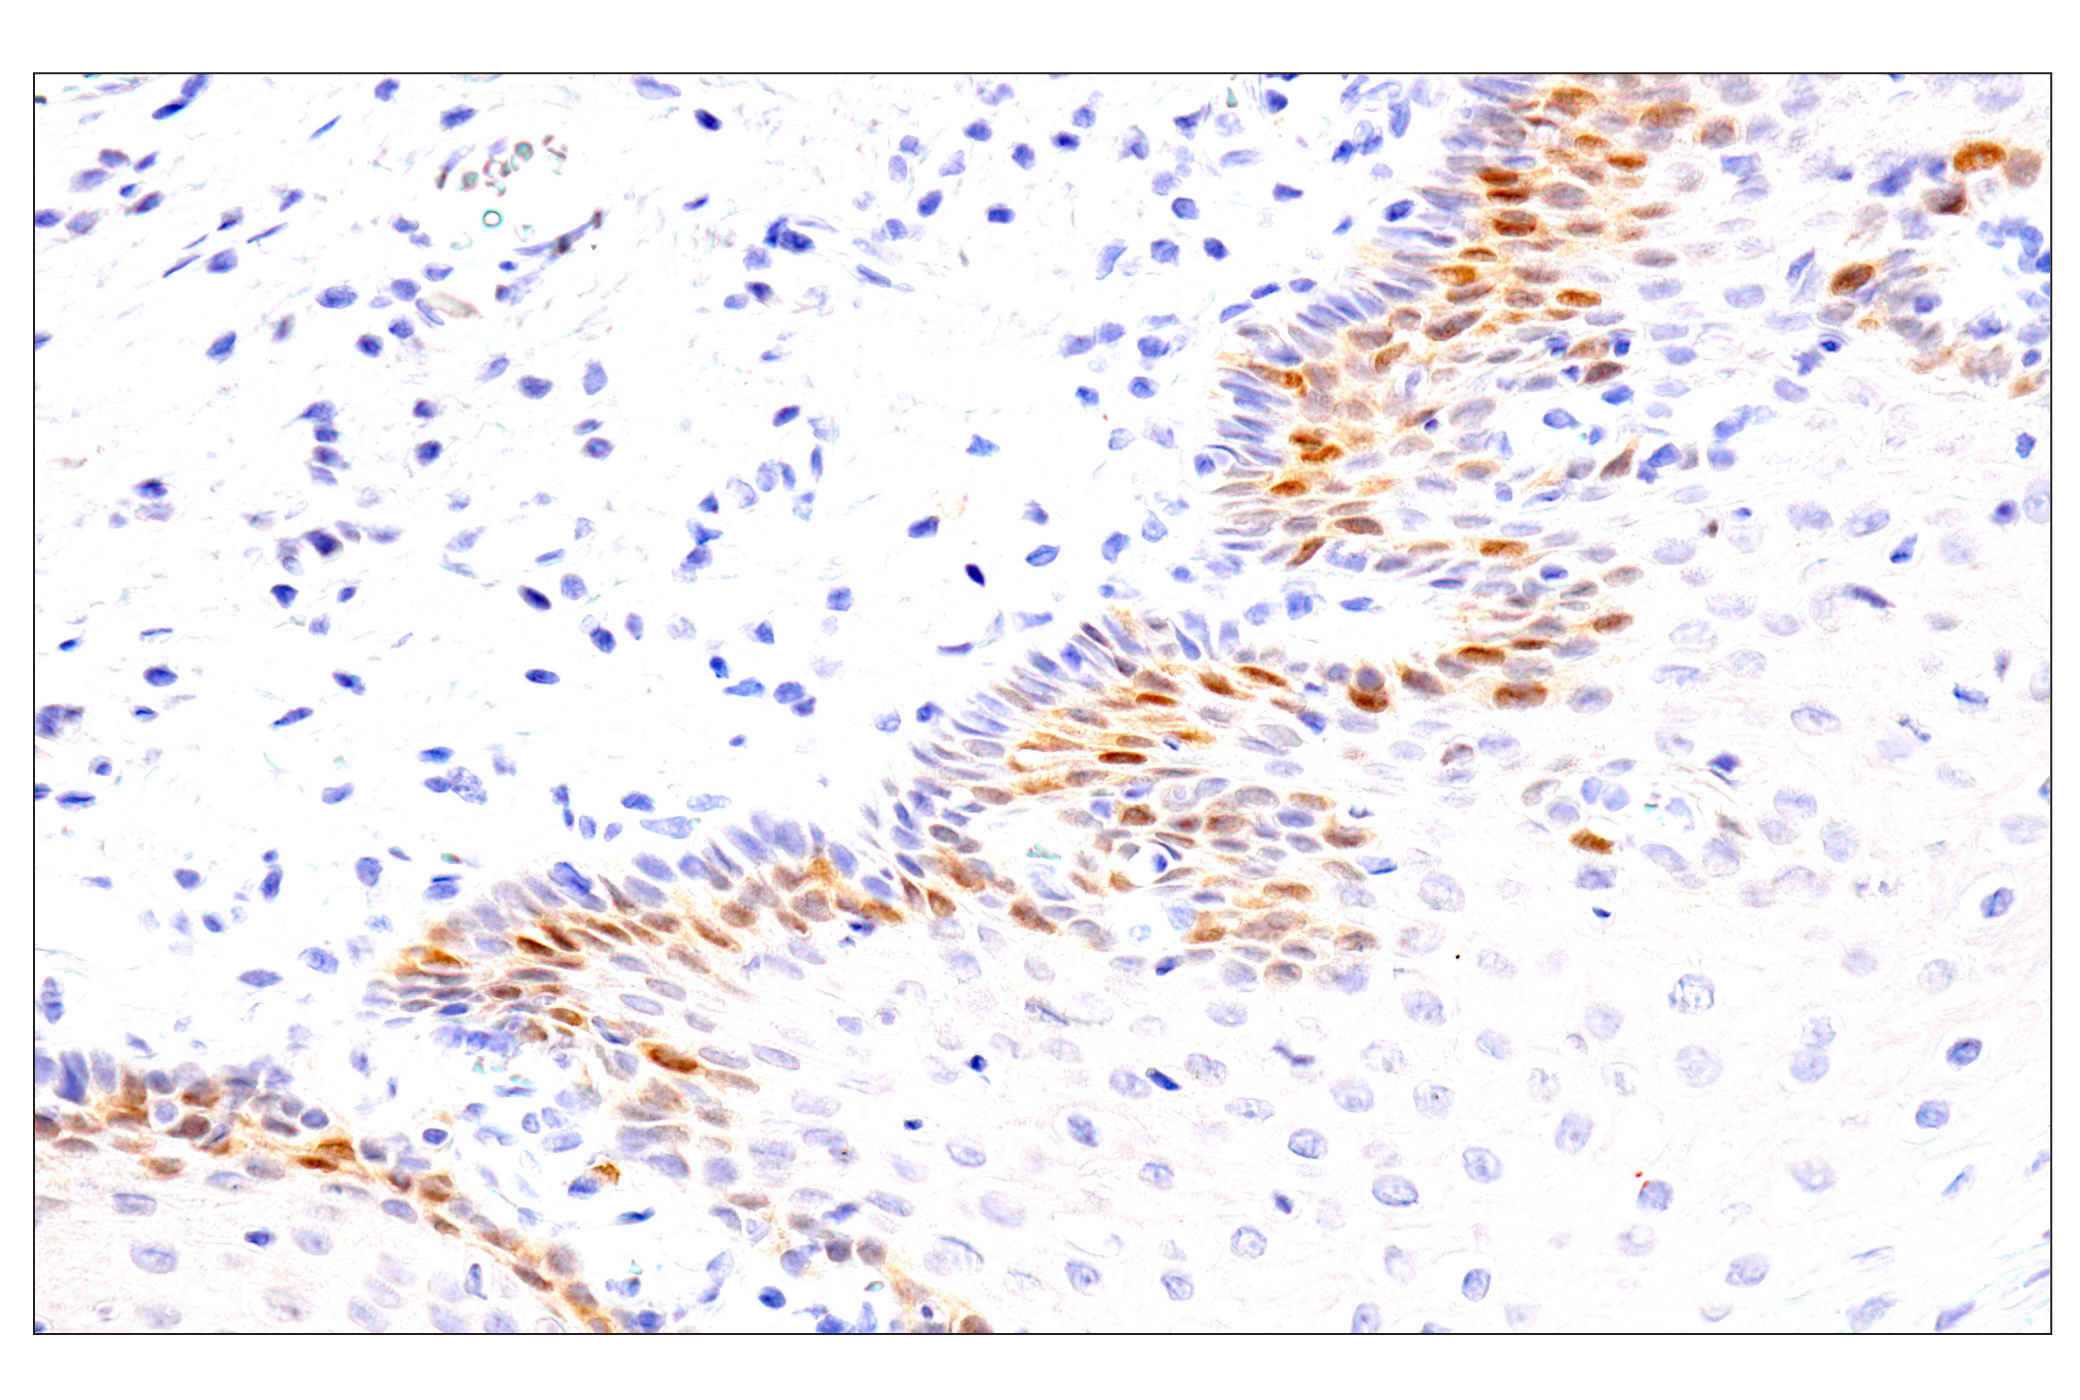  Image 38: Phospho-Chk1/2 Antibody Sampler Kit